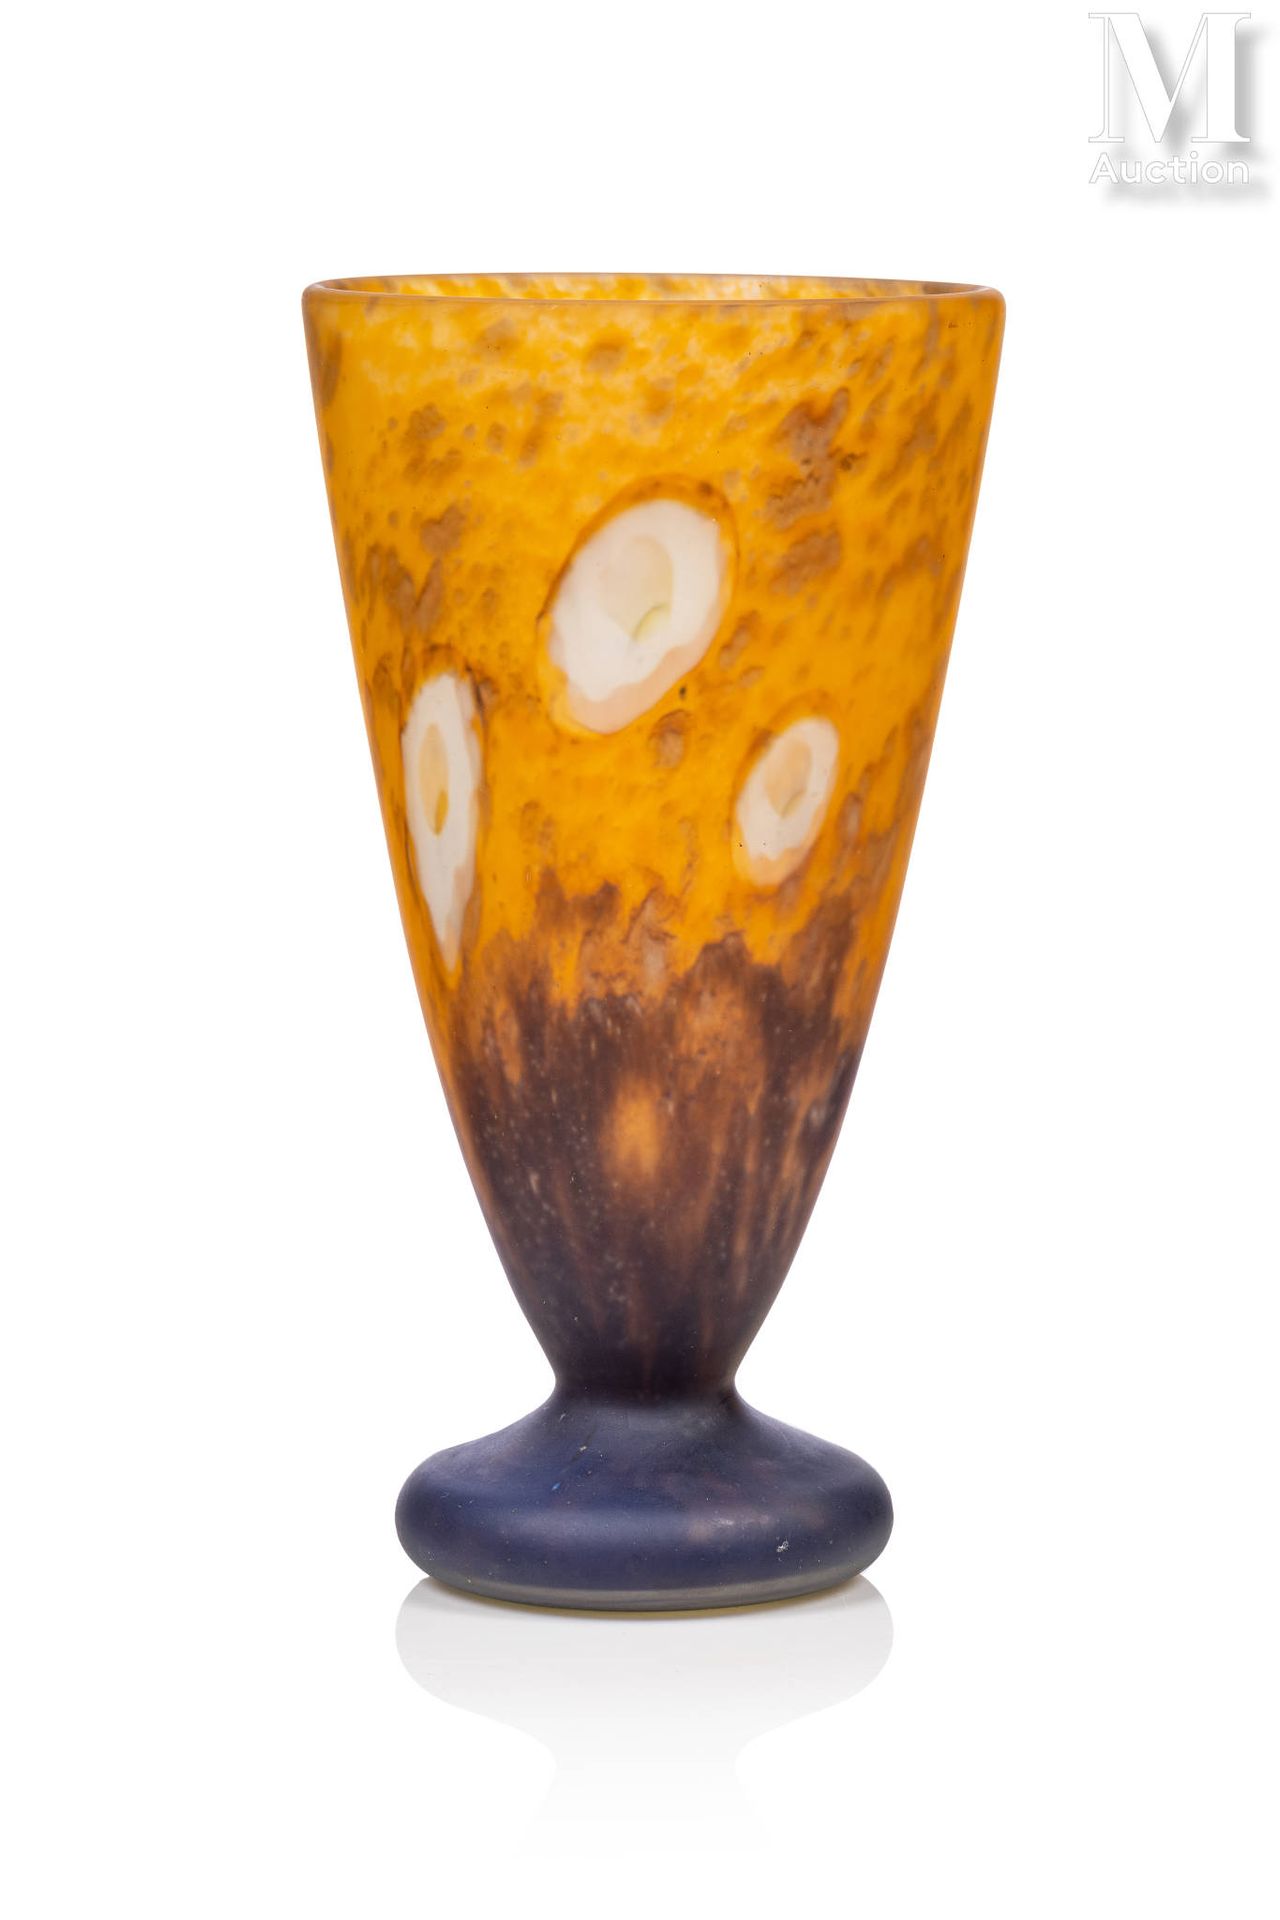 DAUM - Nancy 一个黄色和蓝色的有色玻璃花瓶，放在一个凹陷的圆形基座上。

底部有 "Daum # Nancy "的签名。

高：25厘米



由D&hellip;